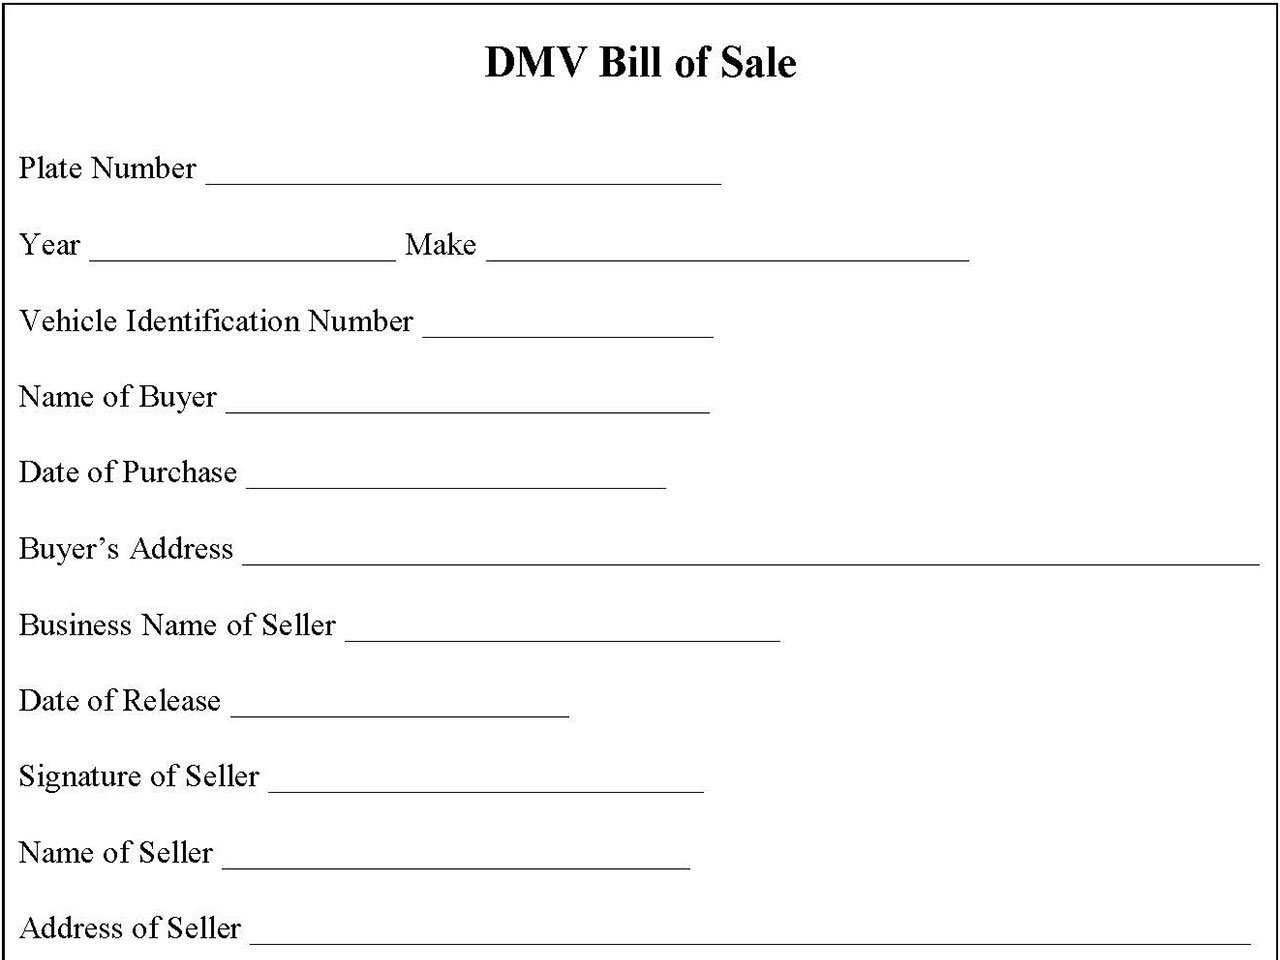 DMV Bill of Sale